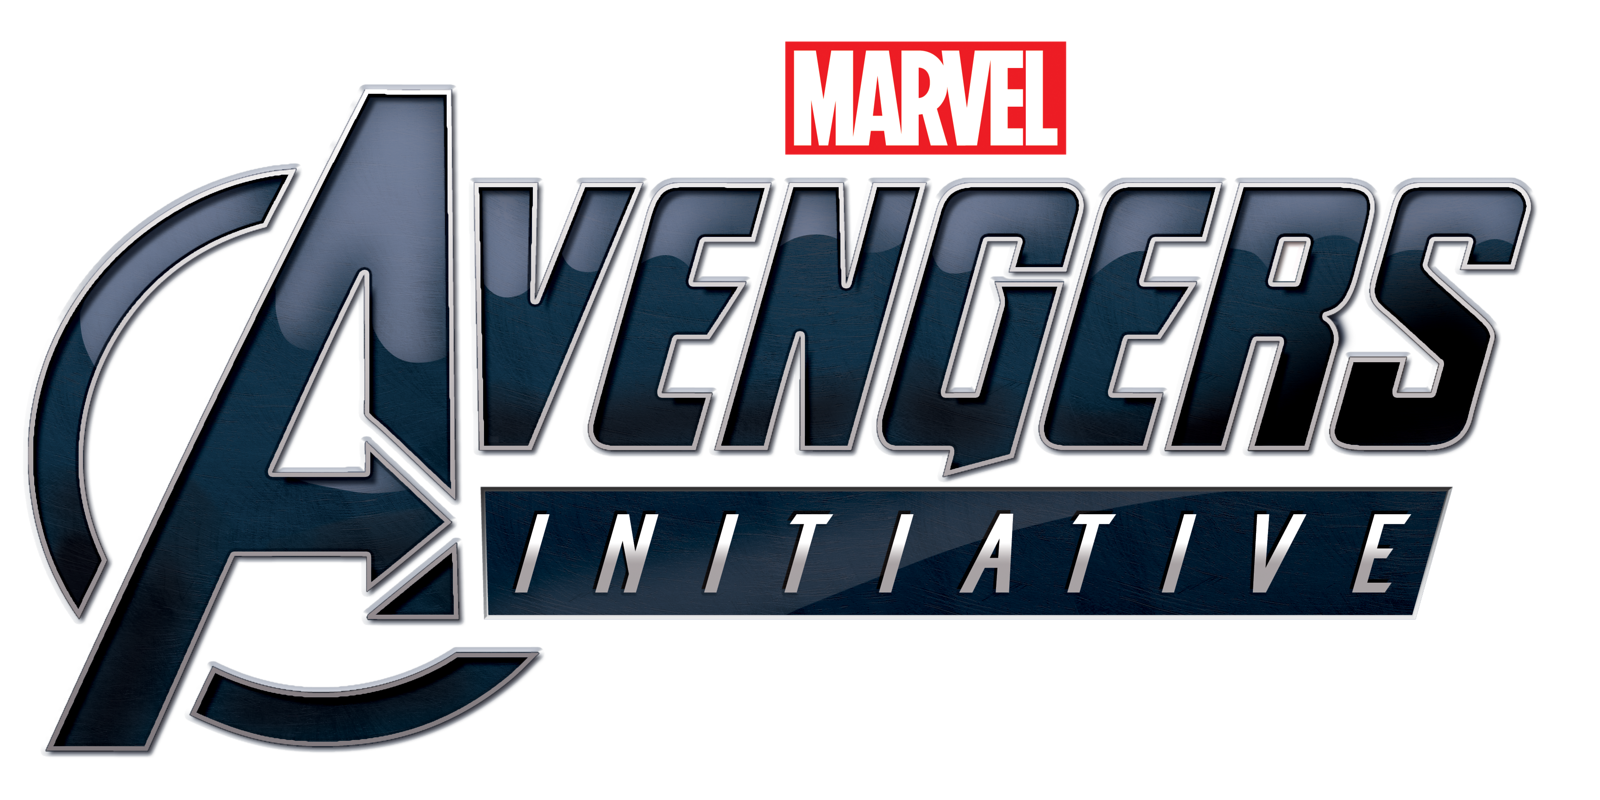 avengers logo, image logo avengers initiative marvel wiki #27984